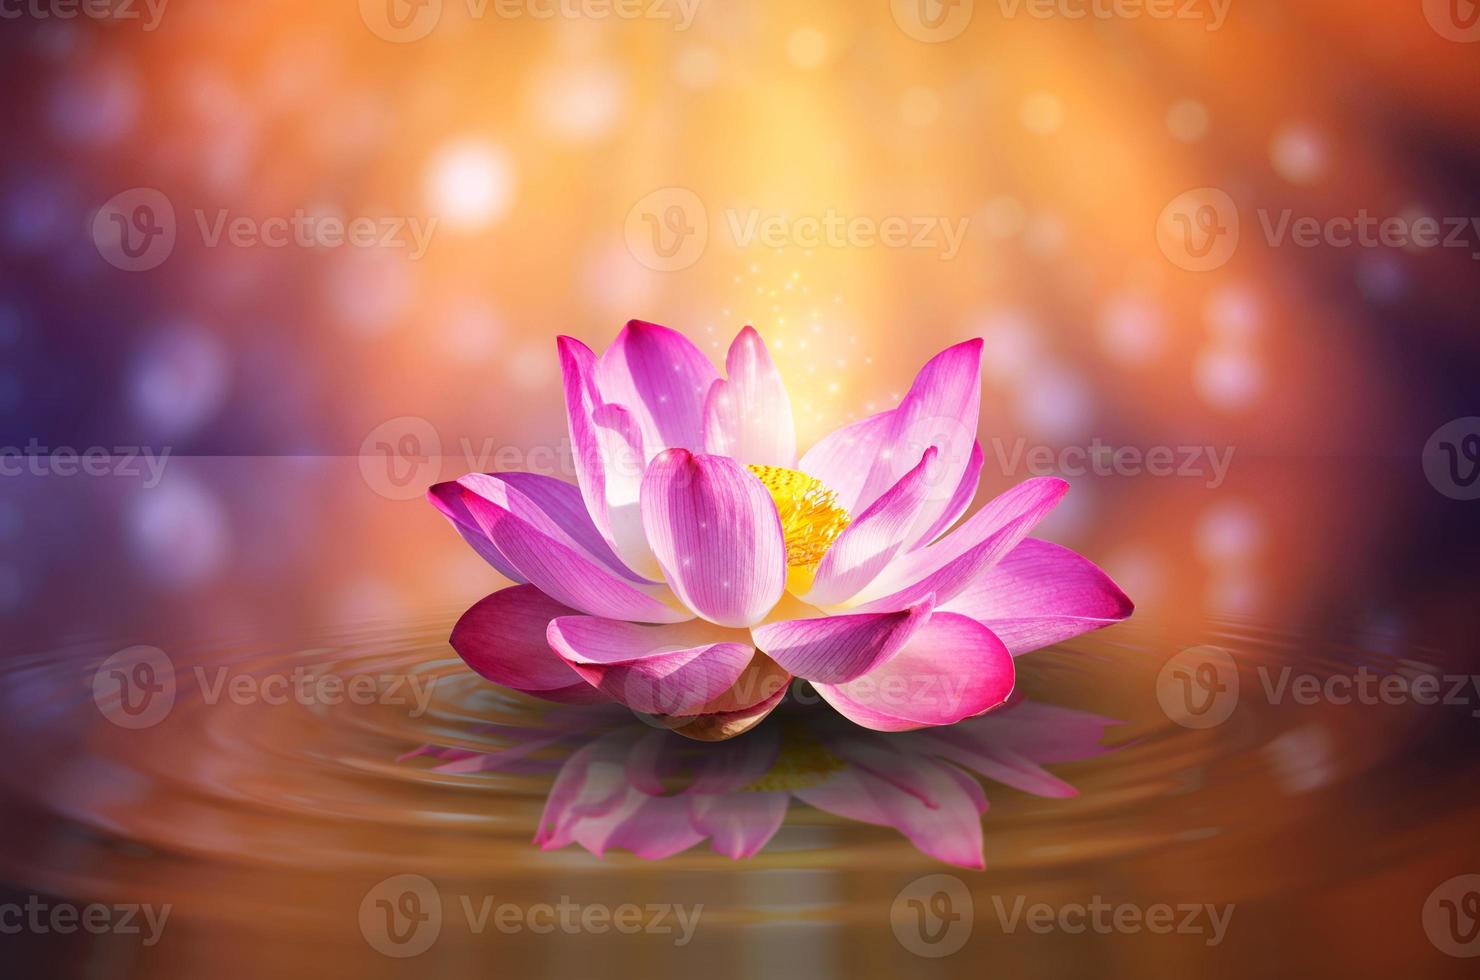 lotusrosa ljus lila flytande ljus gnistrande lila bakgrund foto